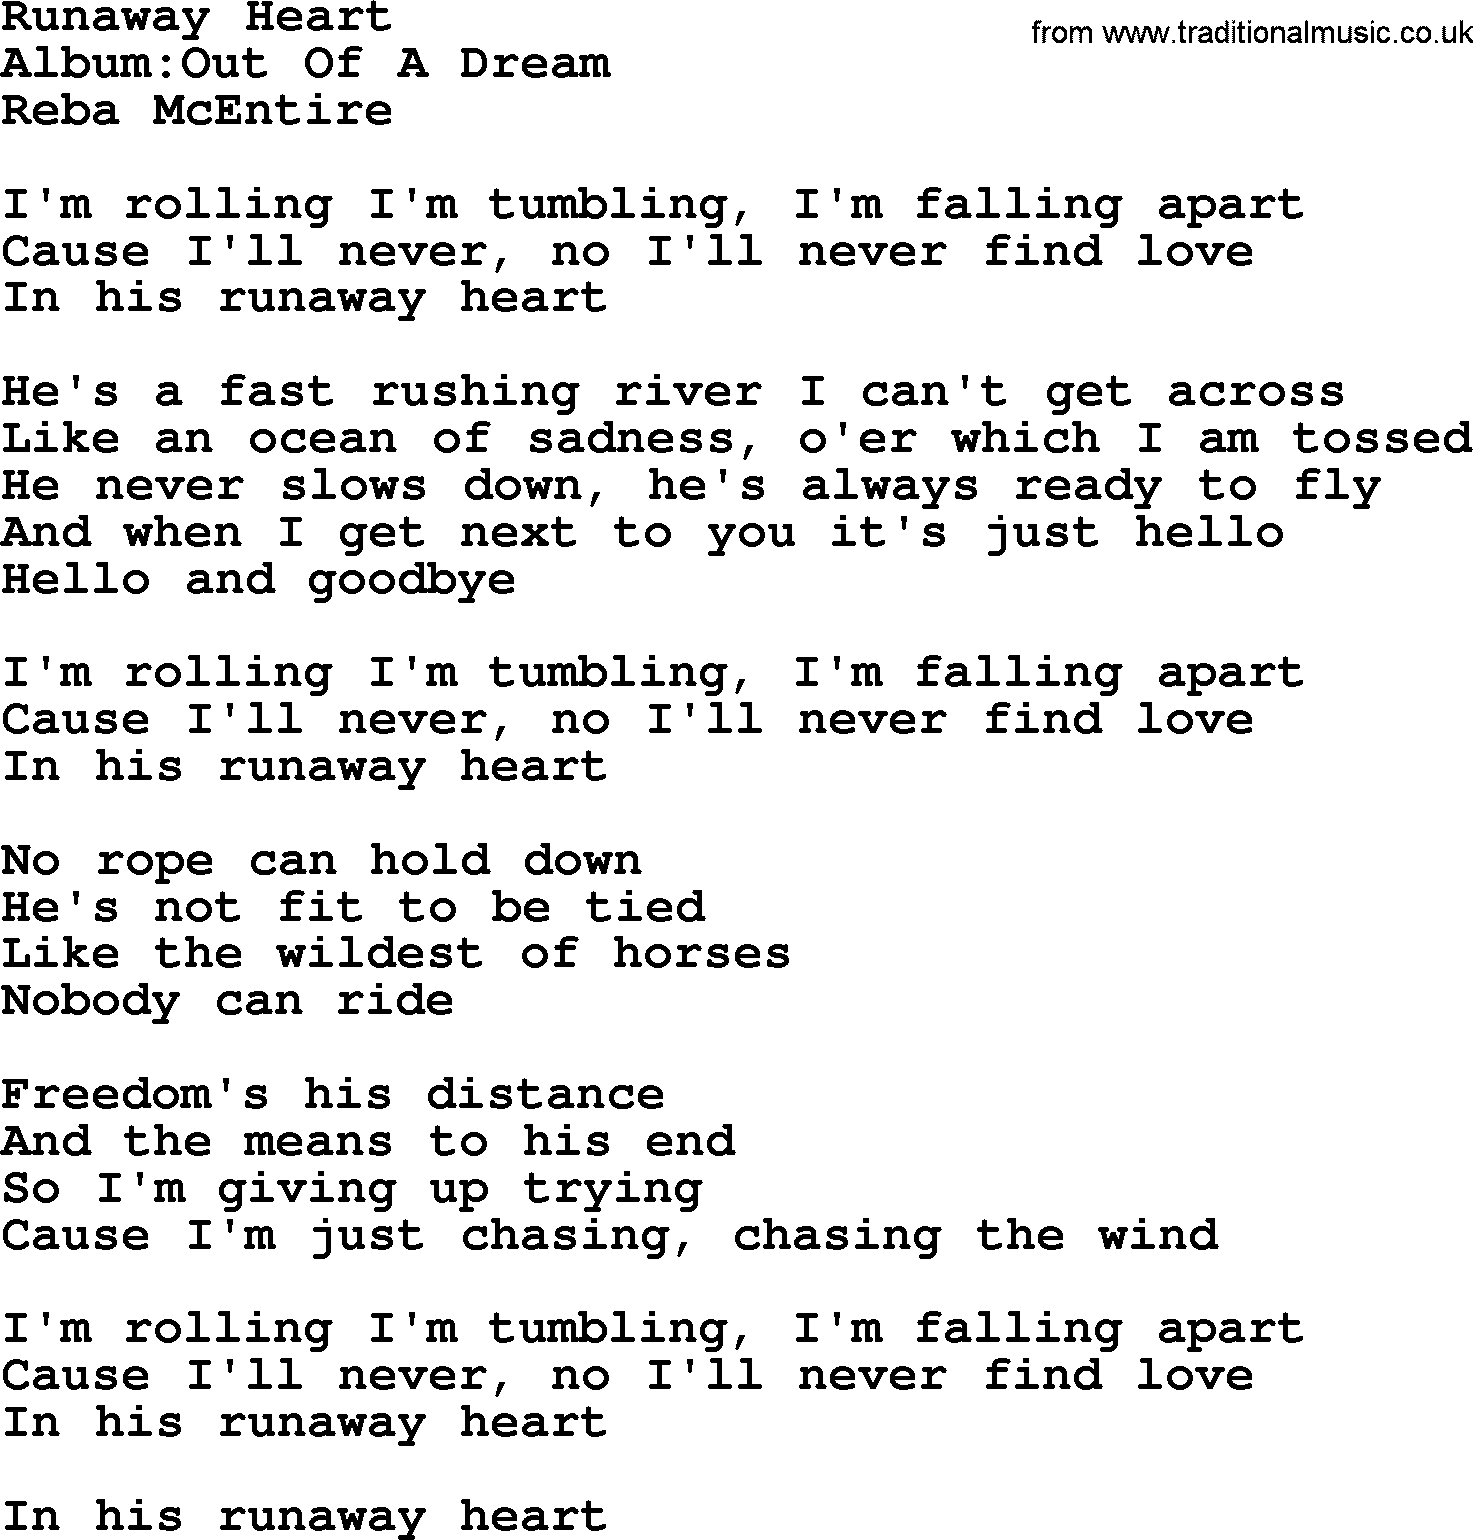 Reba McEntire song: Runaway Heart lyrics